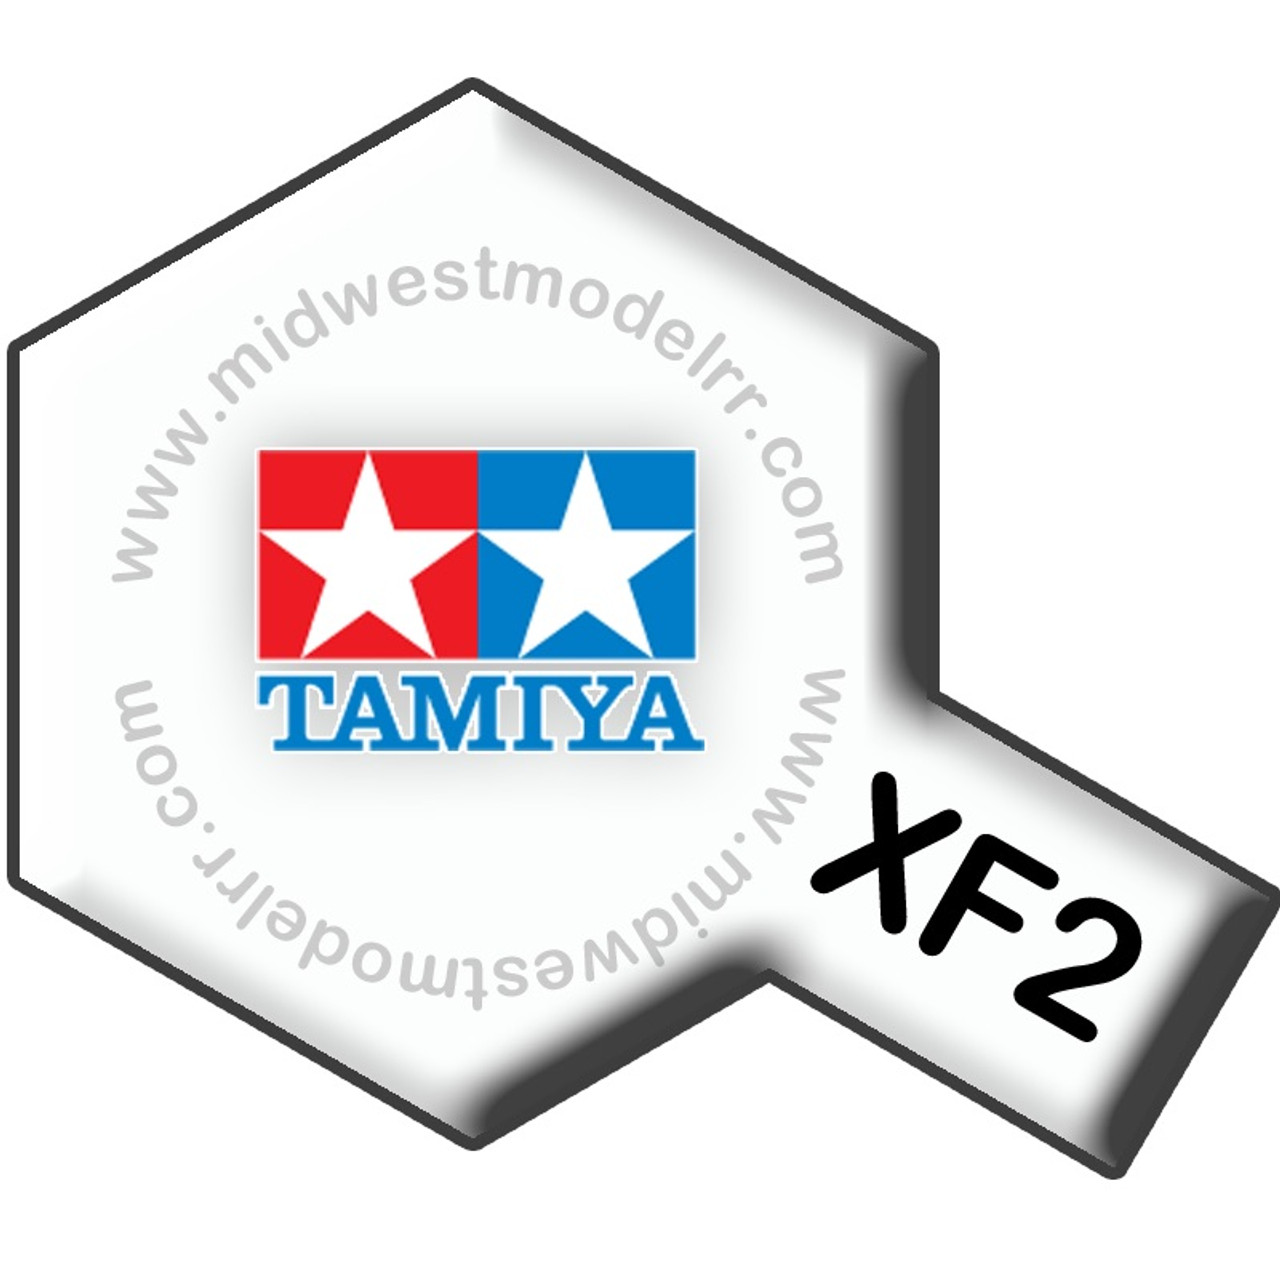 Tamiya X-24 Clear Yellow Gloss Finish Acrylic Paint (23ml) [TAM81024] -  HobbyTown